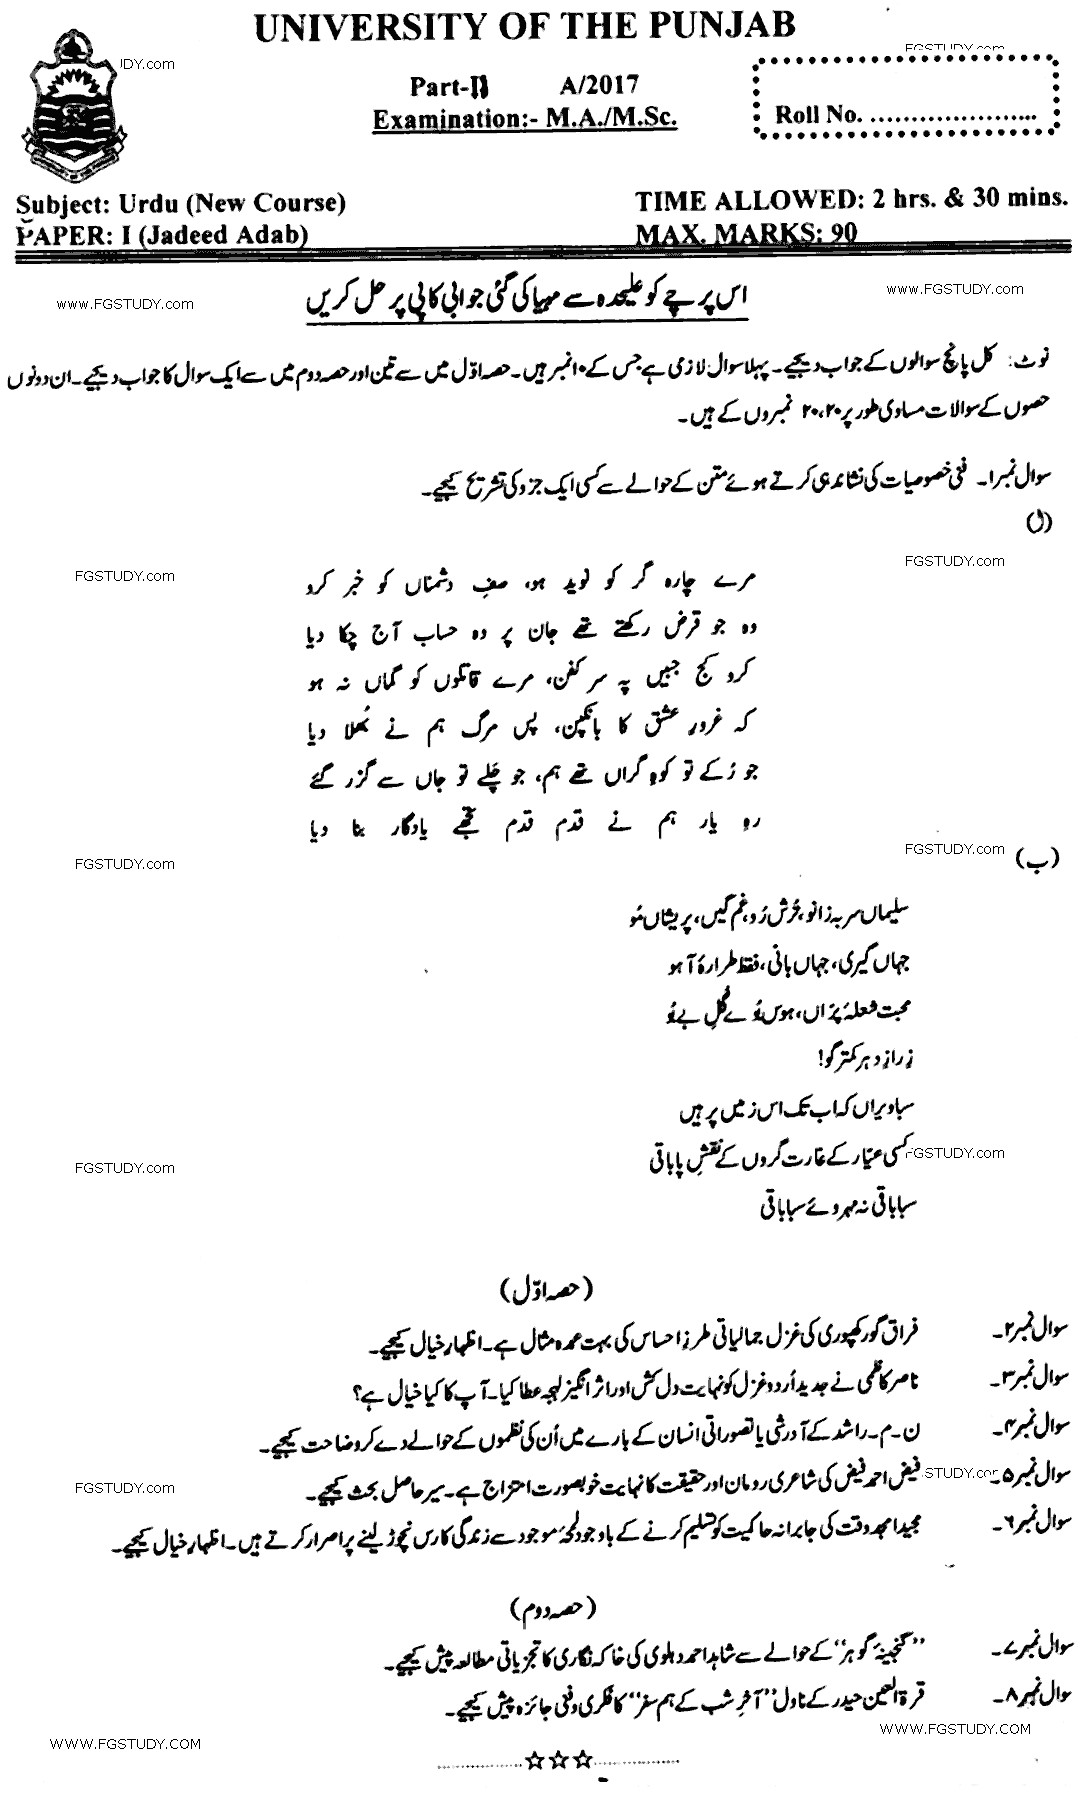 MA Part 2 Urdu Jadeed Adab Past Paper 2017 Punjab University Subjective